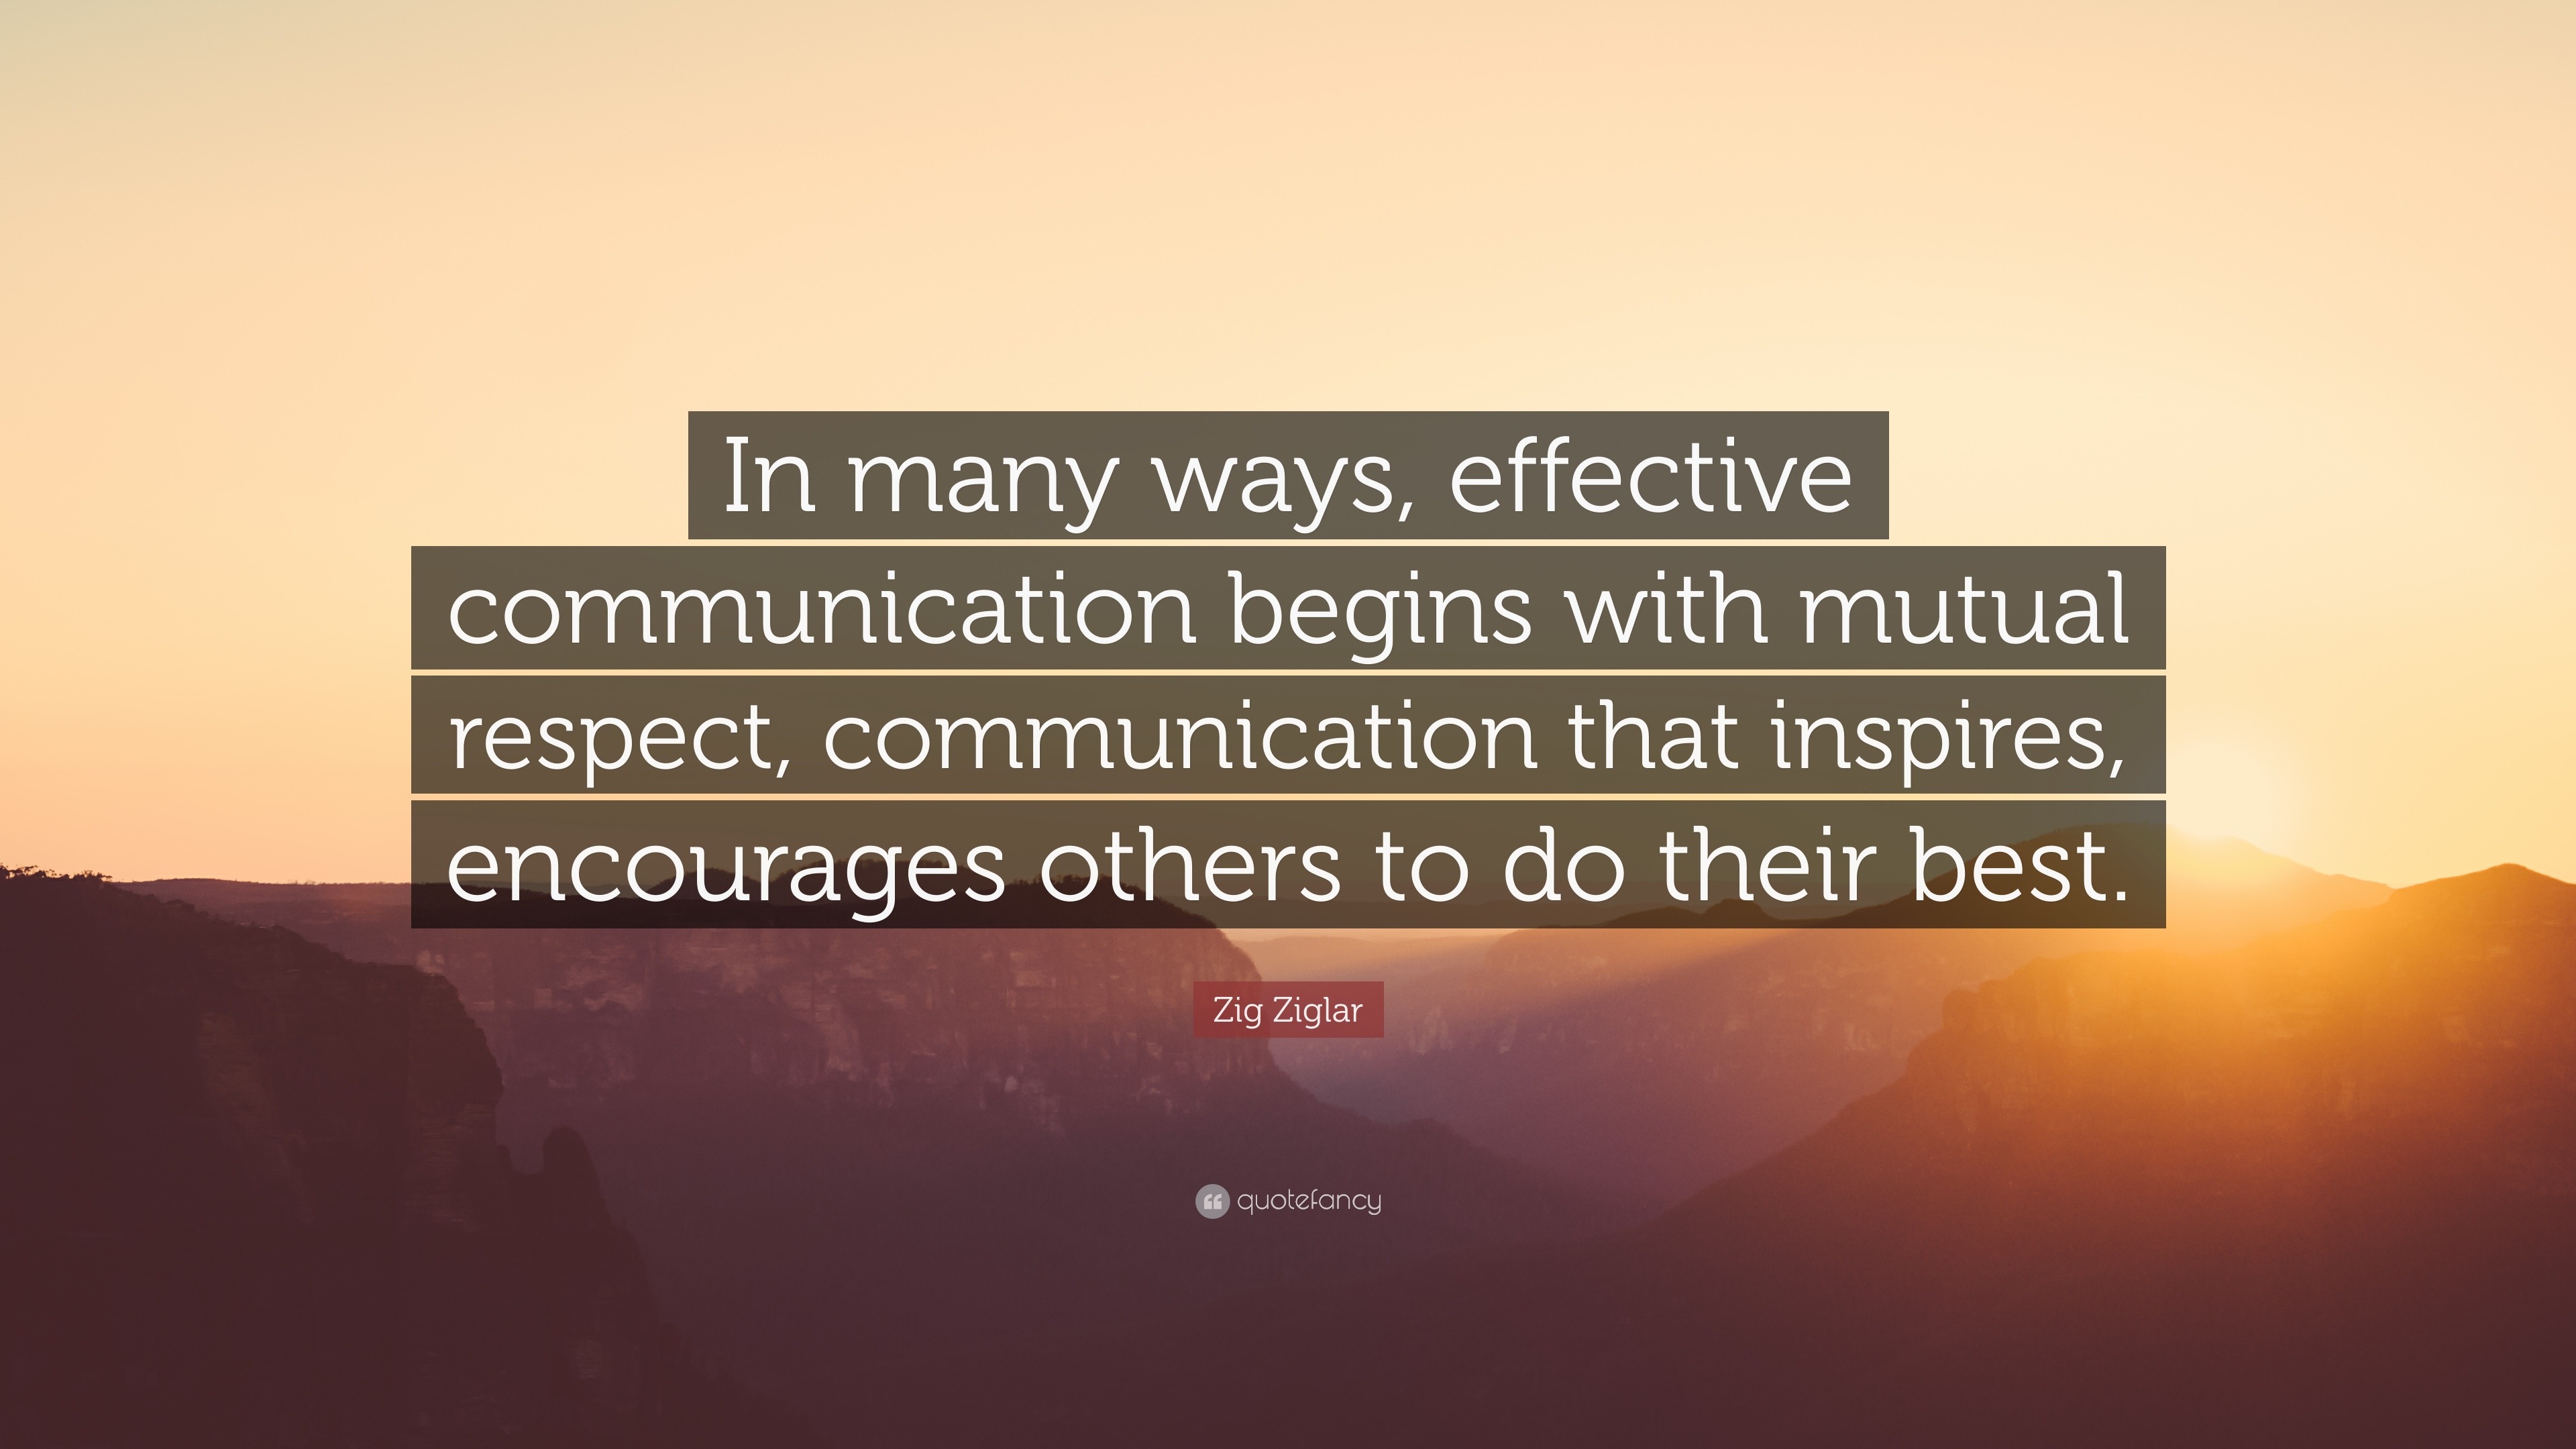 Zig Ziglar Quote: “In many ways, effective communication begins with